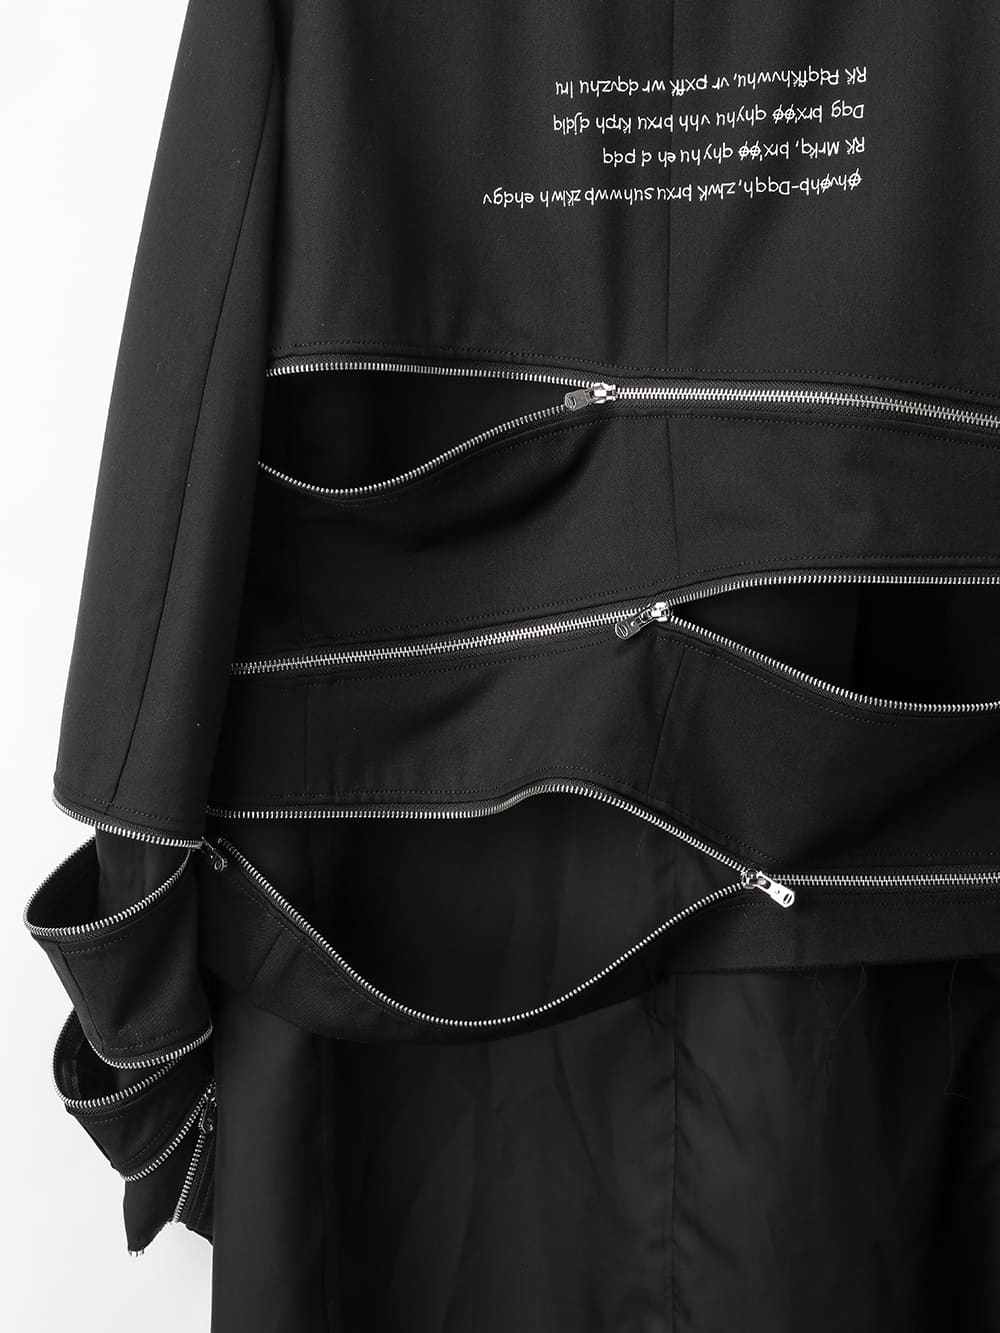 spiral zip mummy notched lapel mid-length jacket.